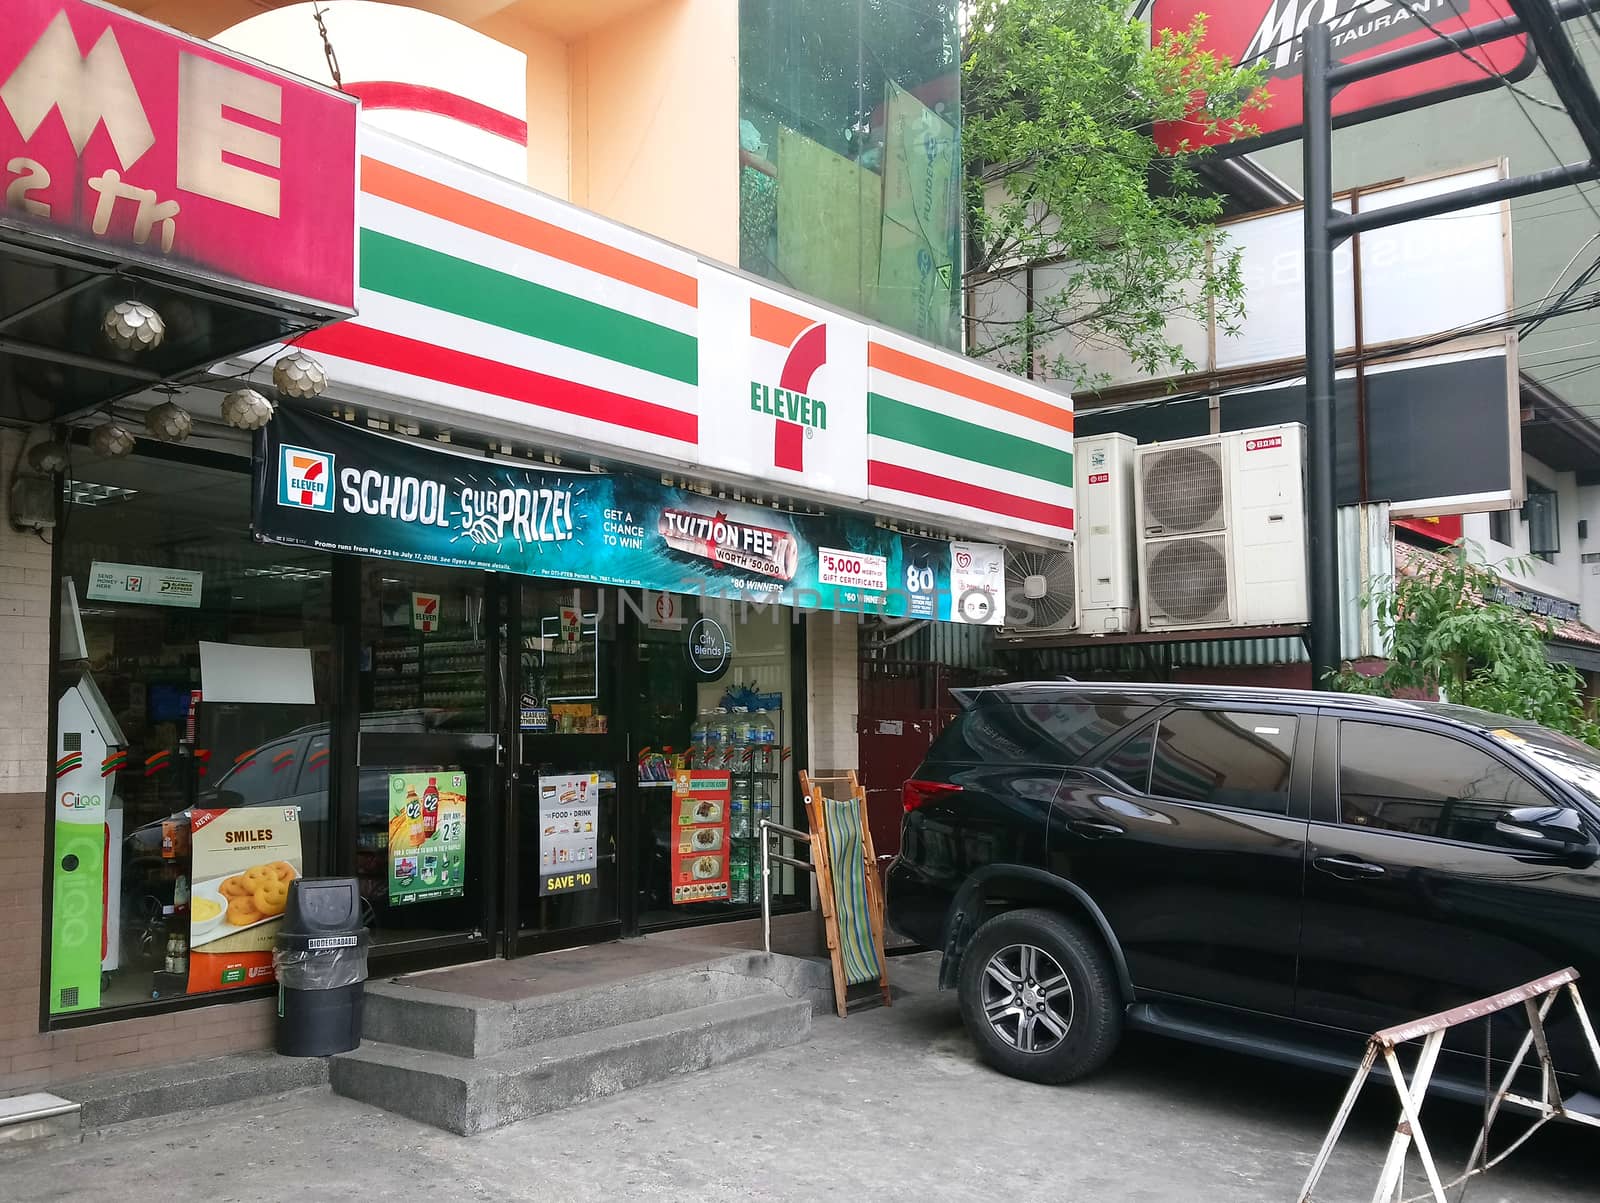 7 Eleven convenience store facade in Manila, Philippines by imwaltersy